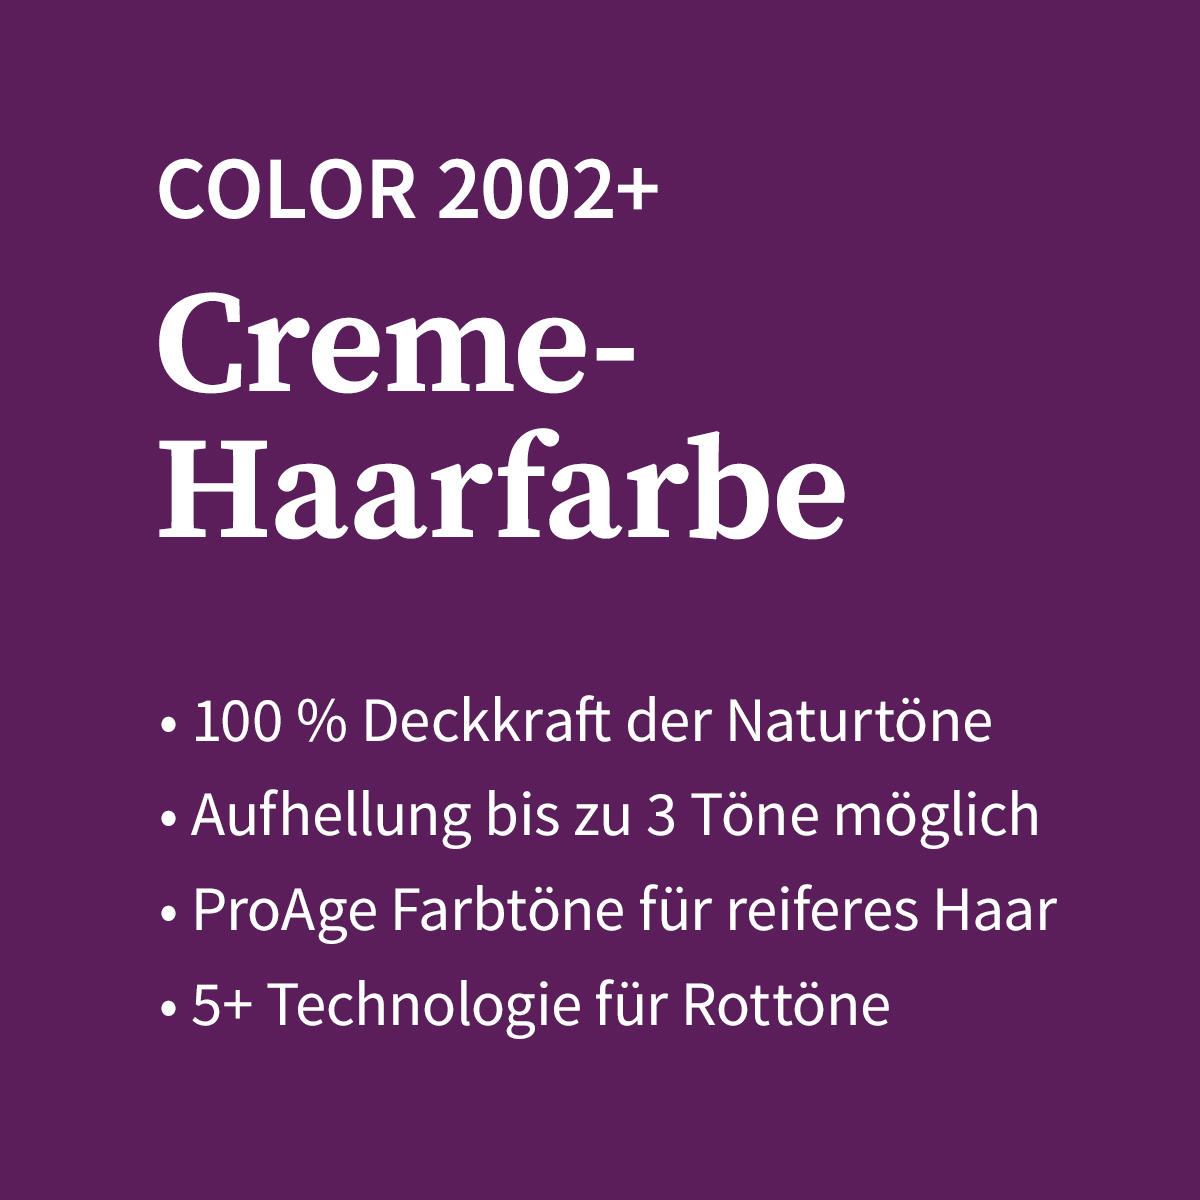 Basler Color 2002+ Cremehaarfarbe 3/4 dunkelbraun rot, Tube 60 ml - 4